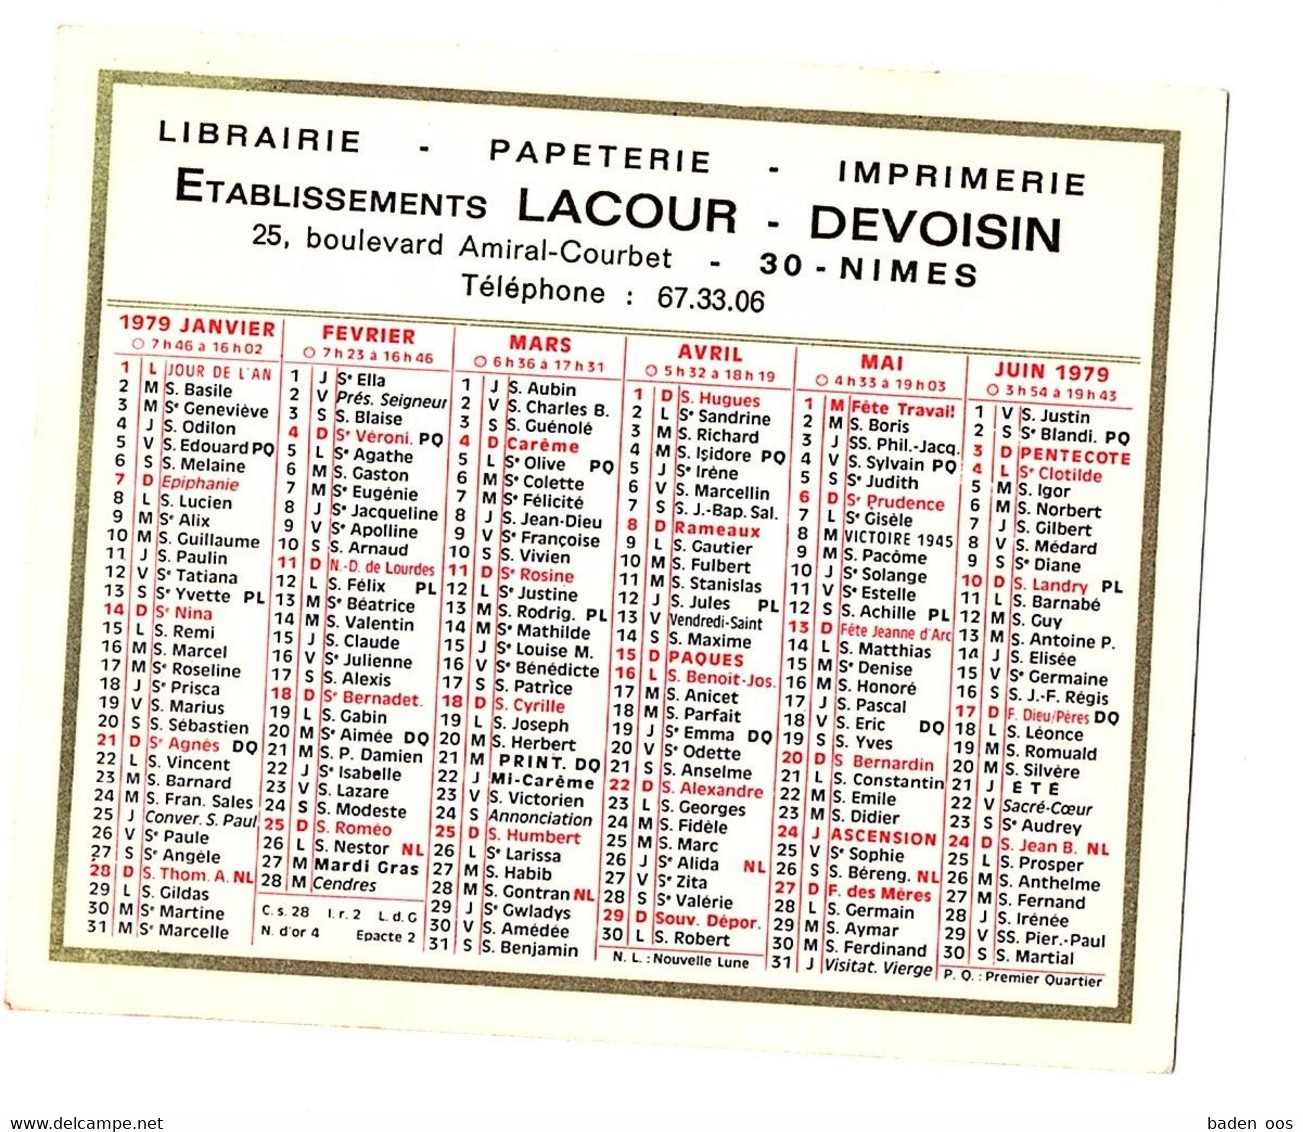 Calendrier Etablissemnt Lacour Devoisin 1979 - Small : 1971-80